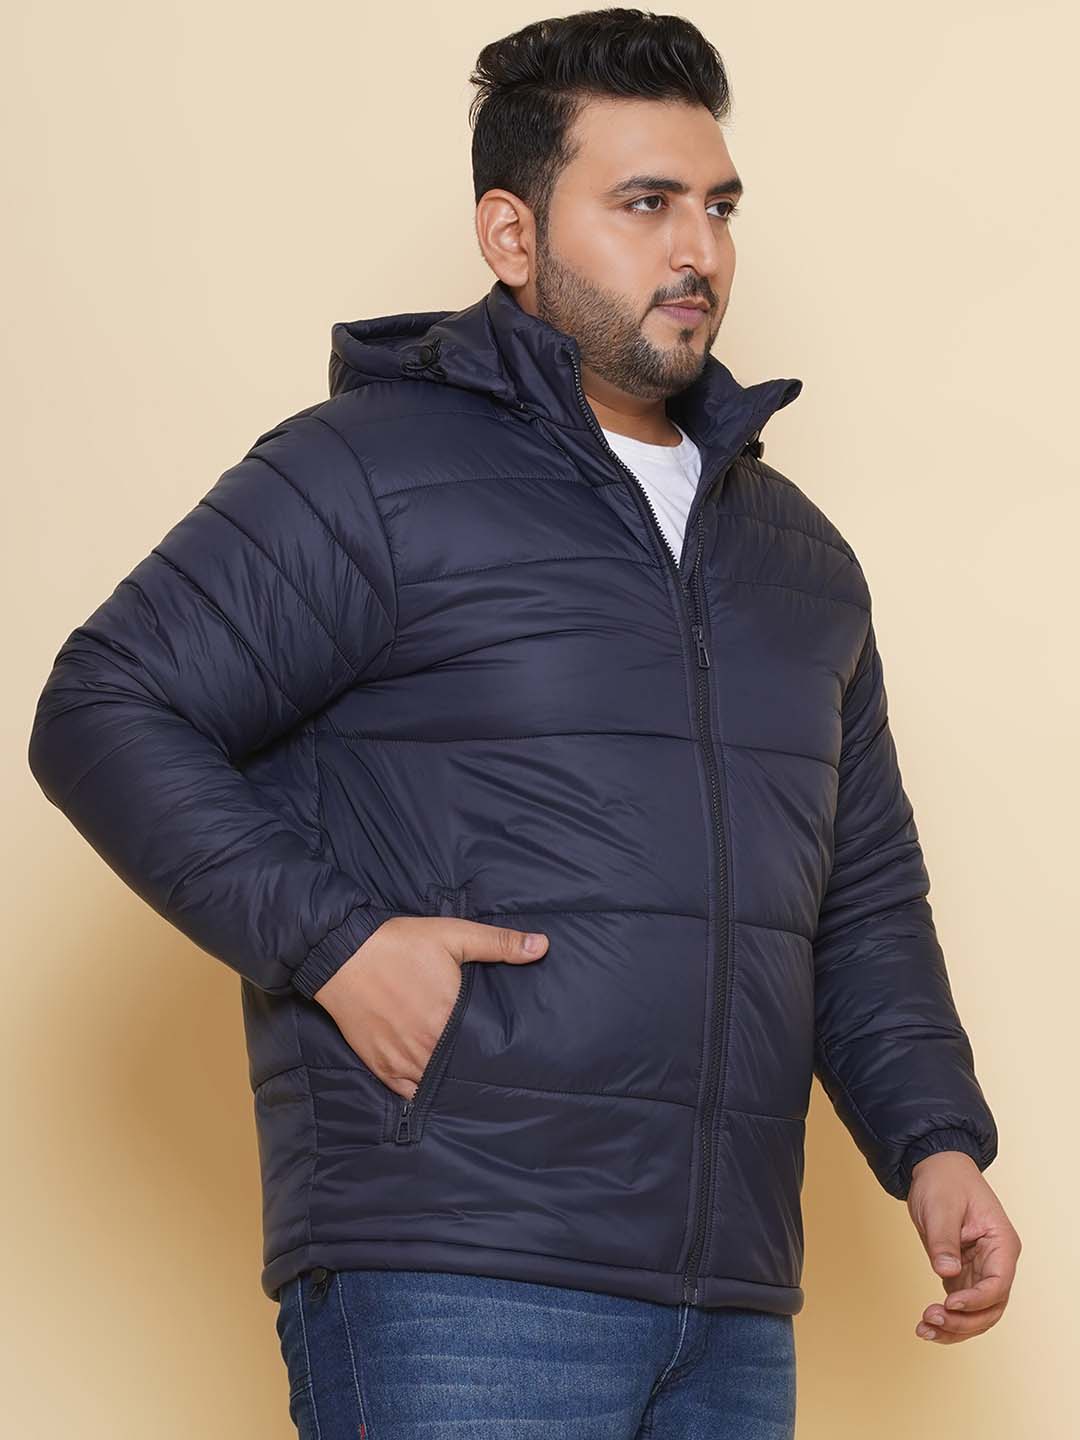 winterwear/jackets/JPJKT73084B/jpjkt73084b-3.jpg